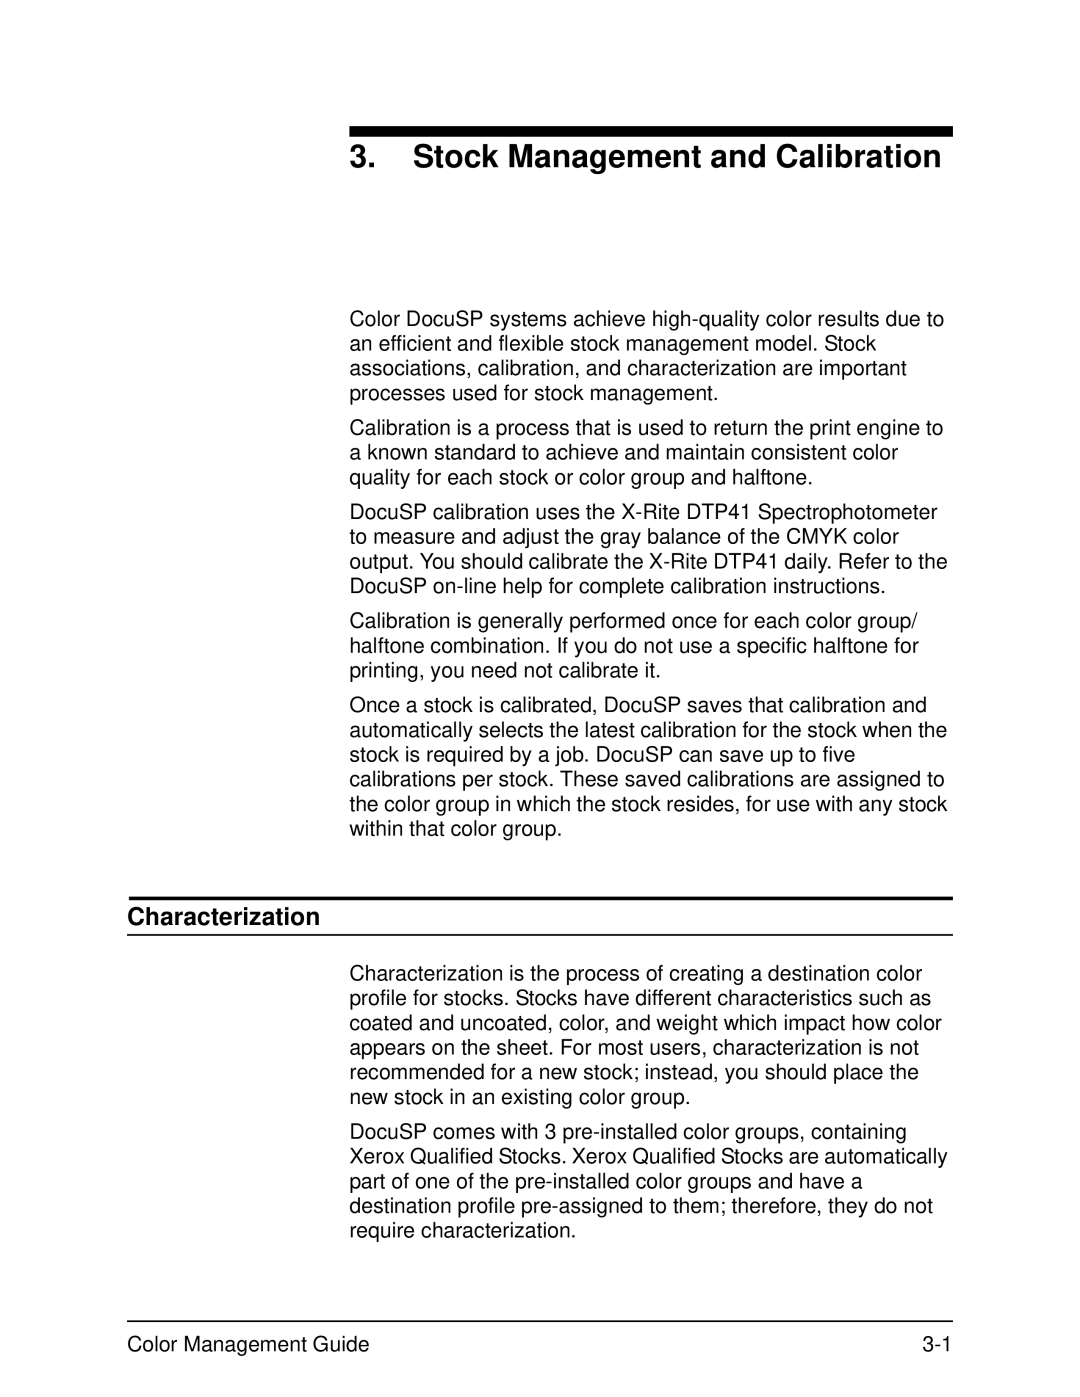 Xerox 701P40210 manual Stock Management and Calibration, Characterization 